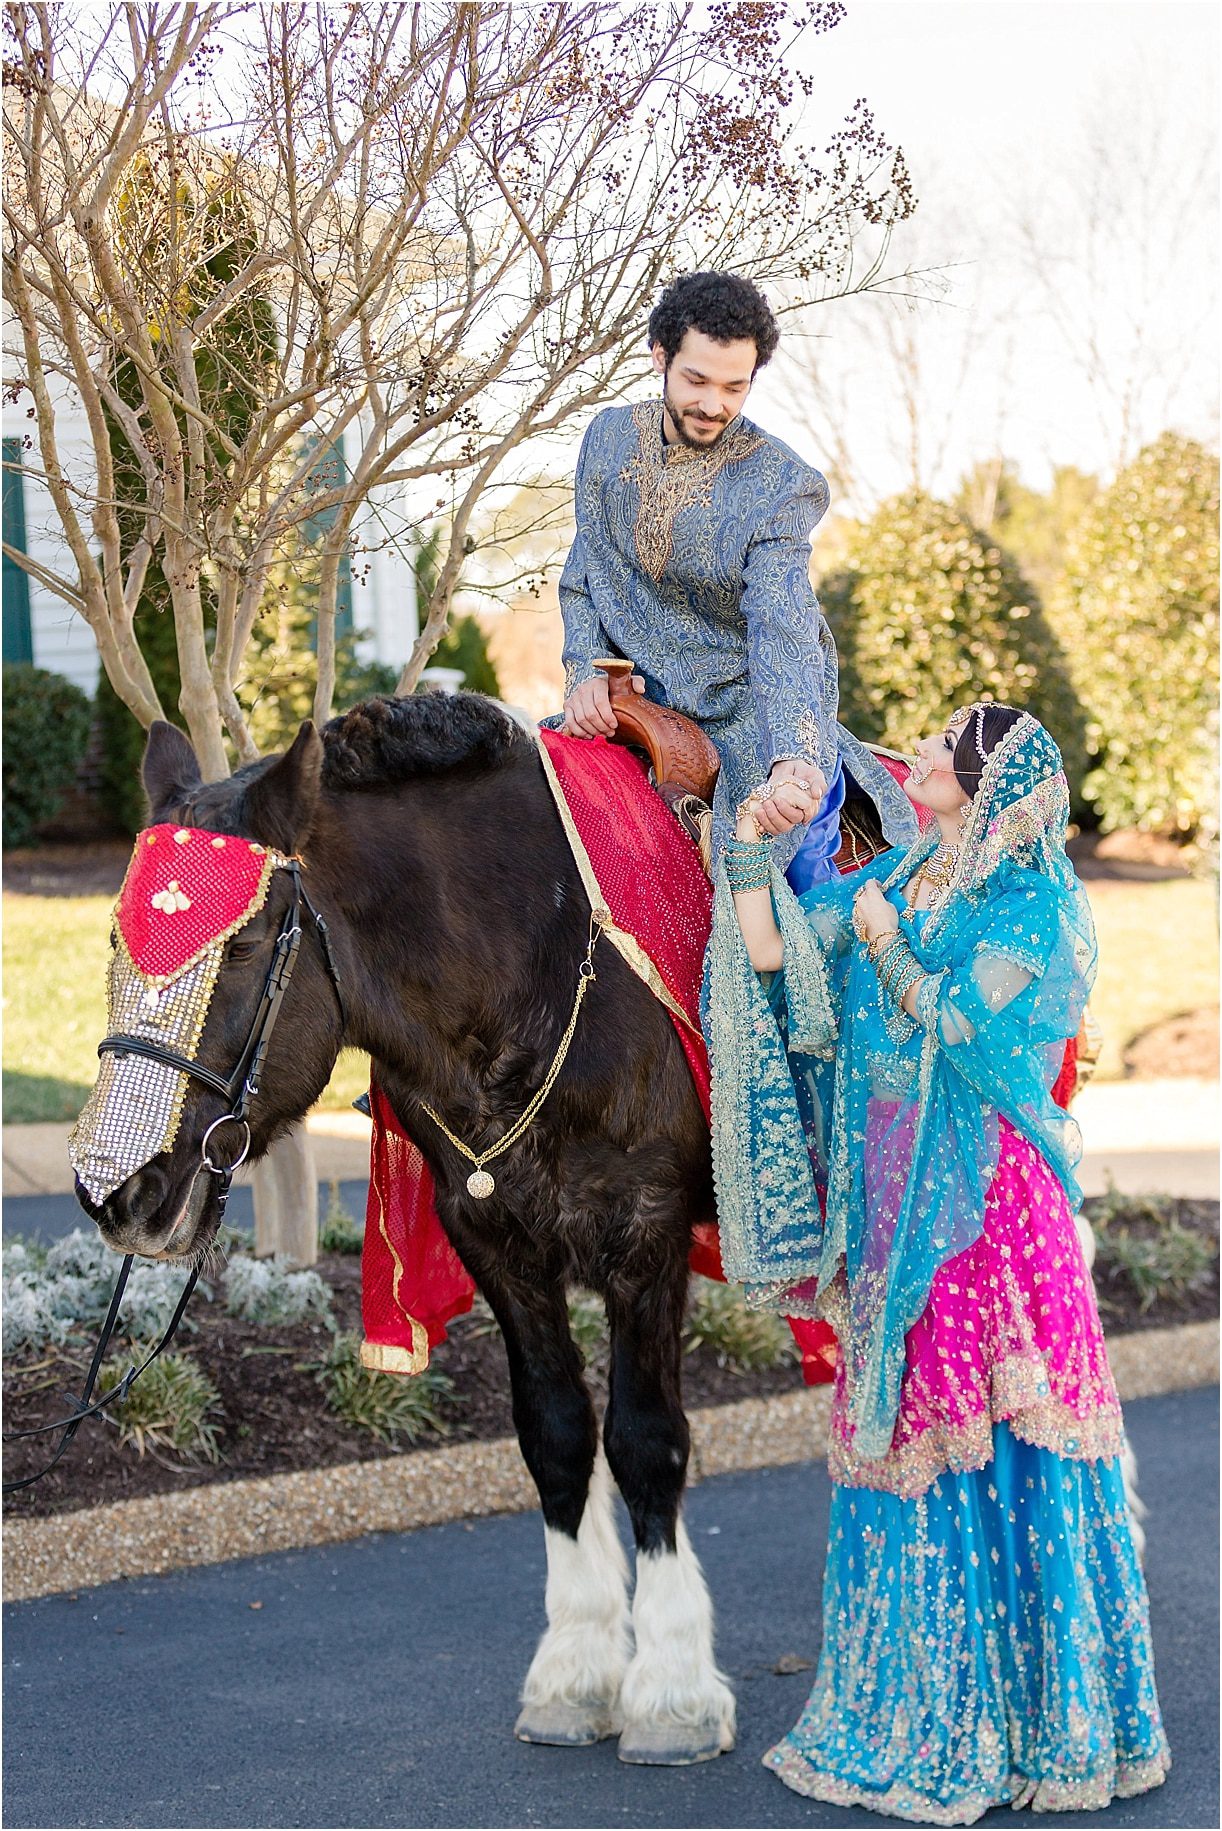 Middle Eastern Wedding | Hill City Bride Virginia Wedding Blog Travel Destination - bride, groom, horse